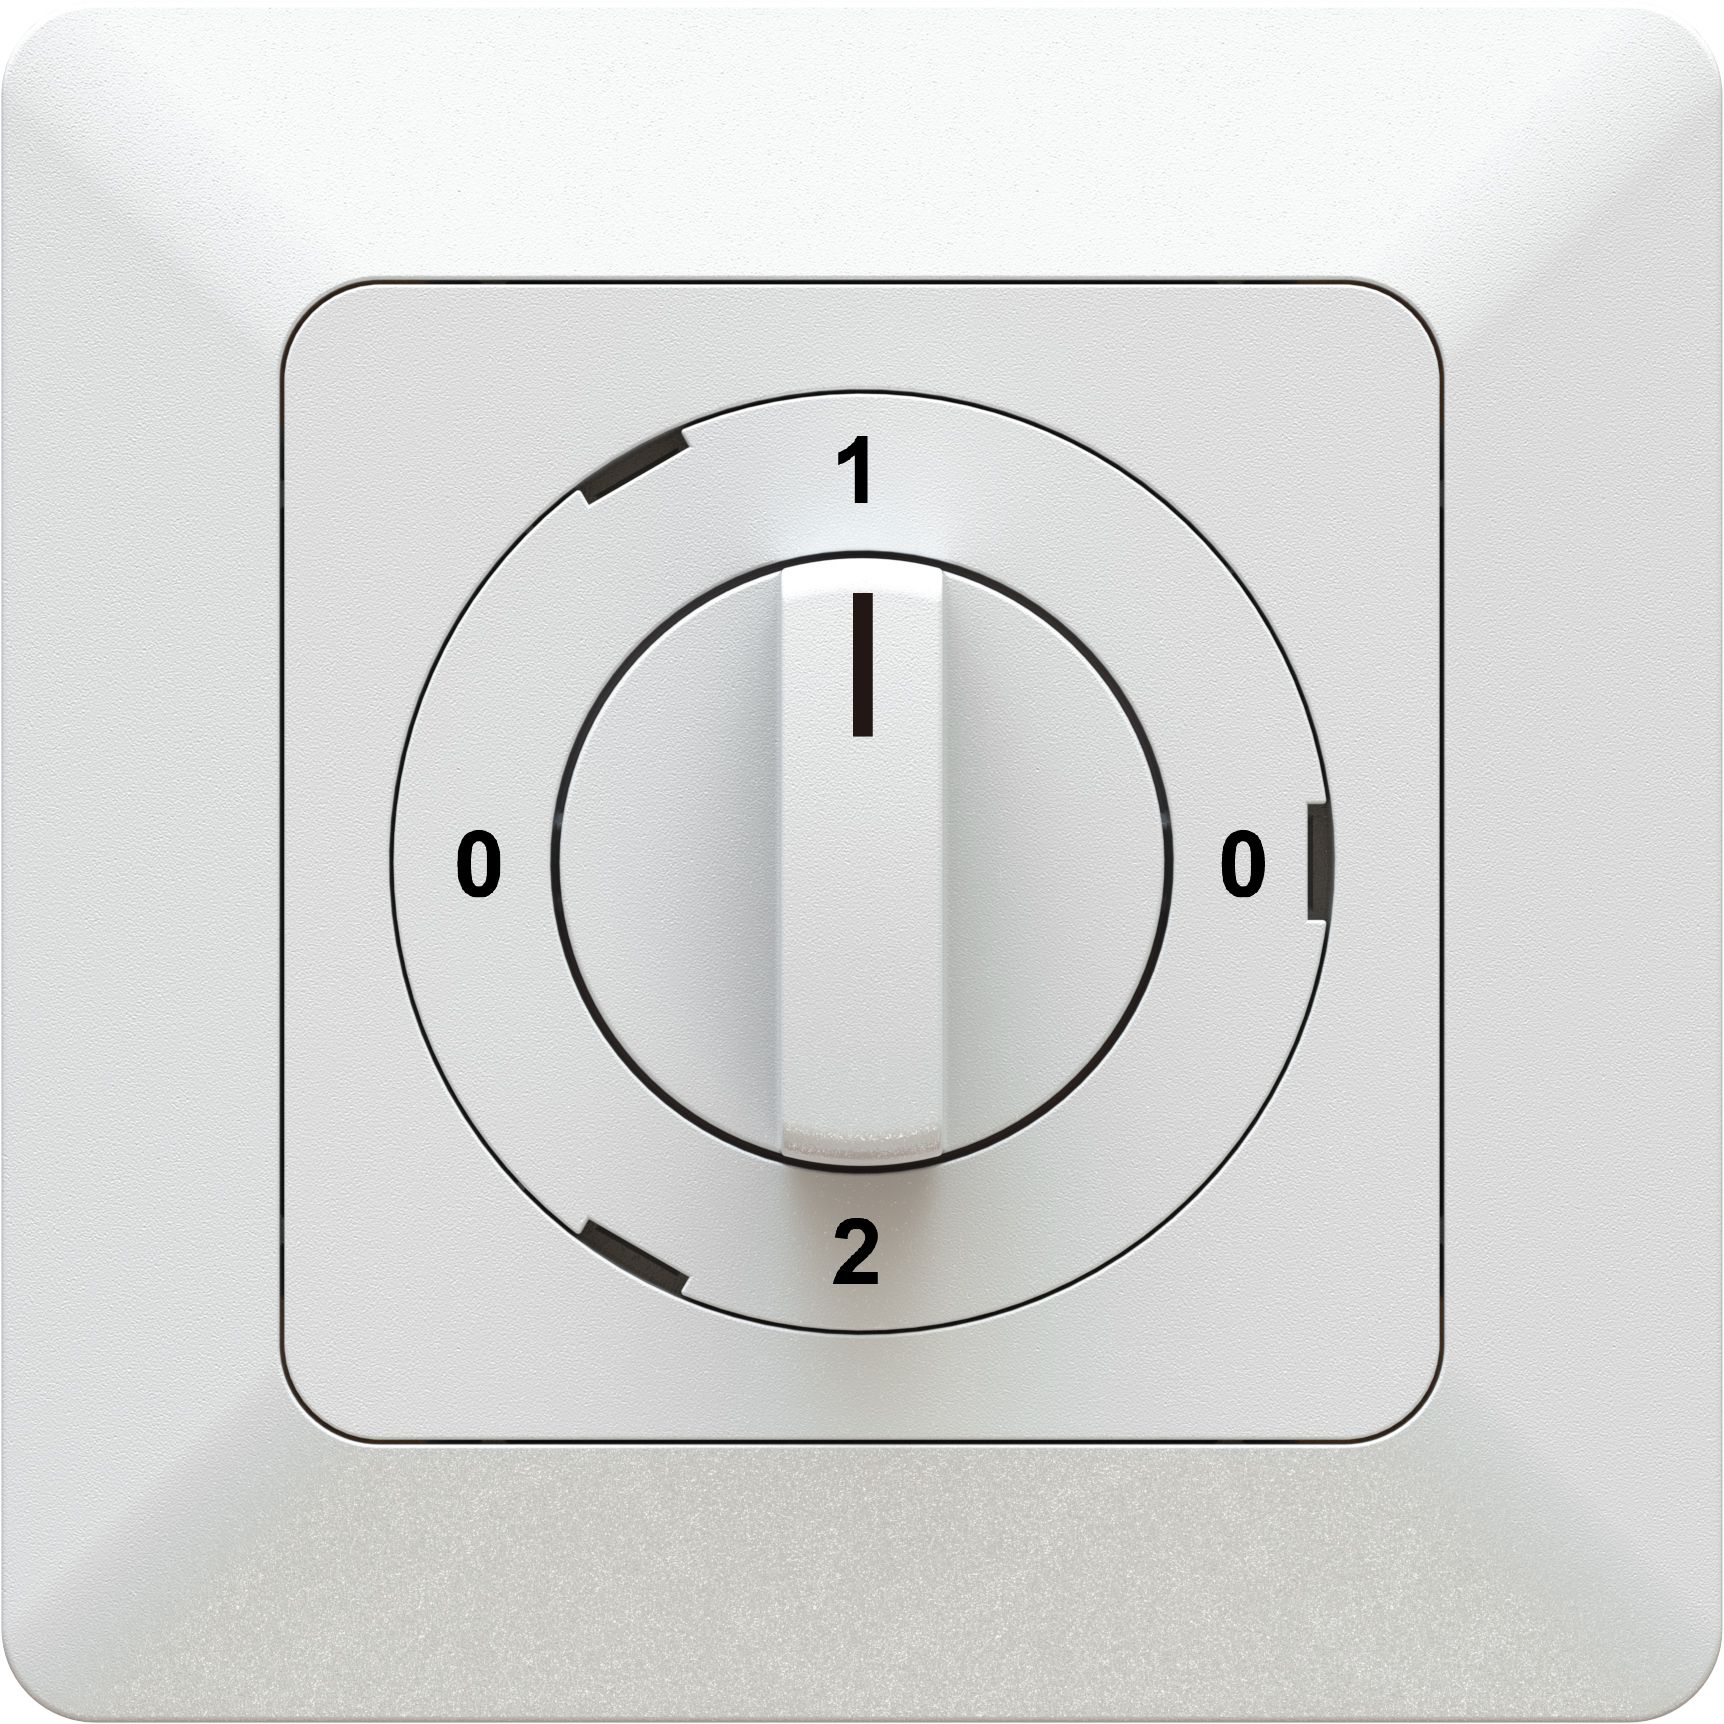 interrupteur rotatif schéma 2/1L 0-1-0-2 ENC priamos blanc